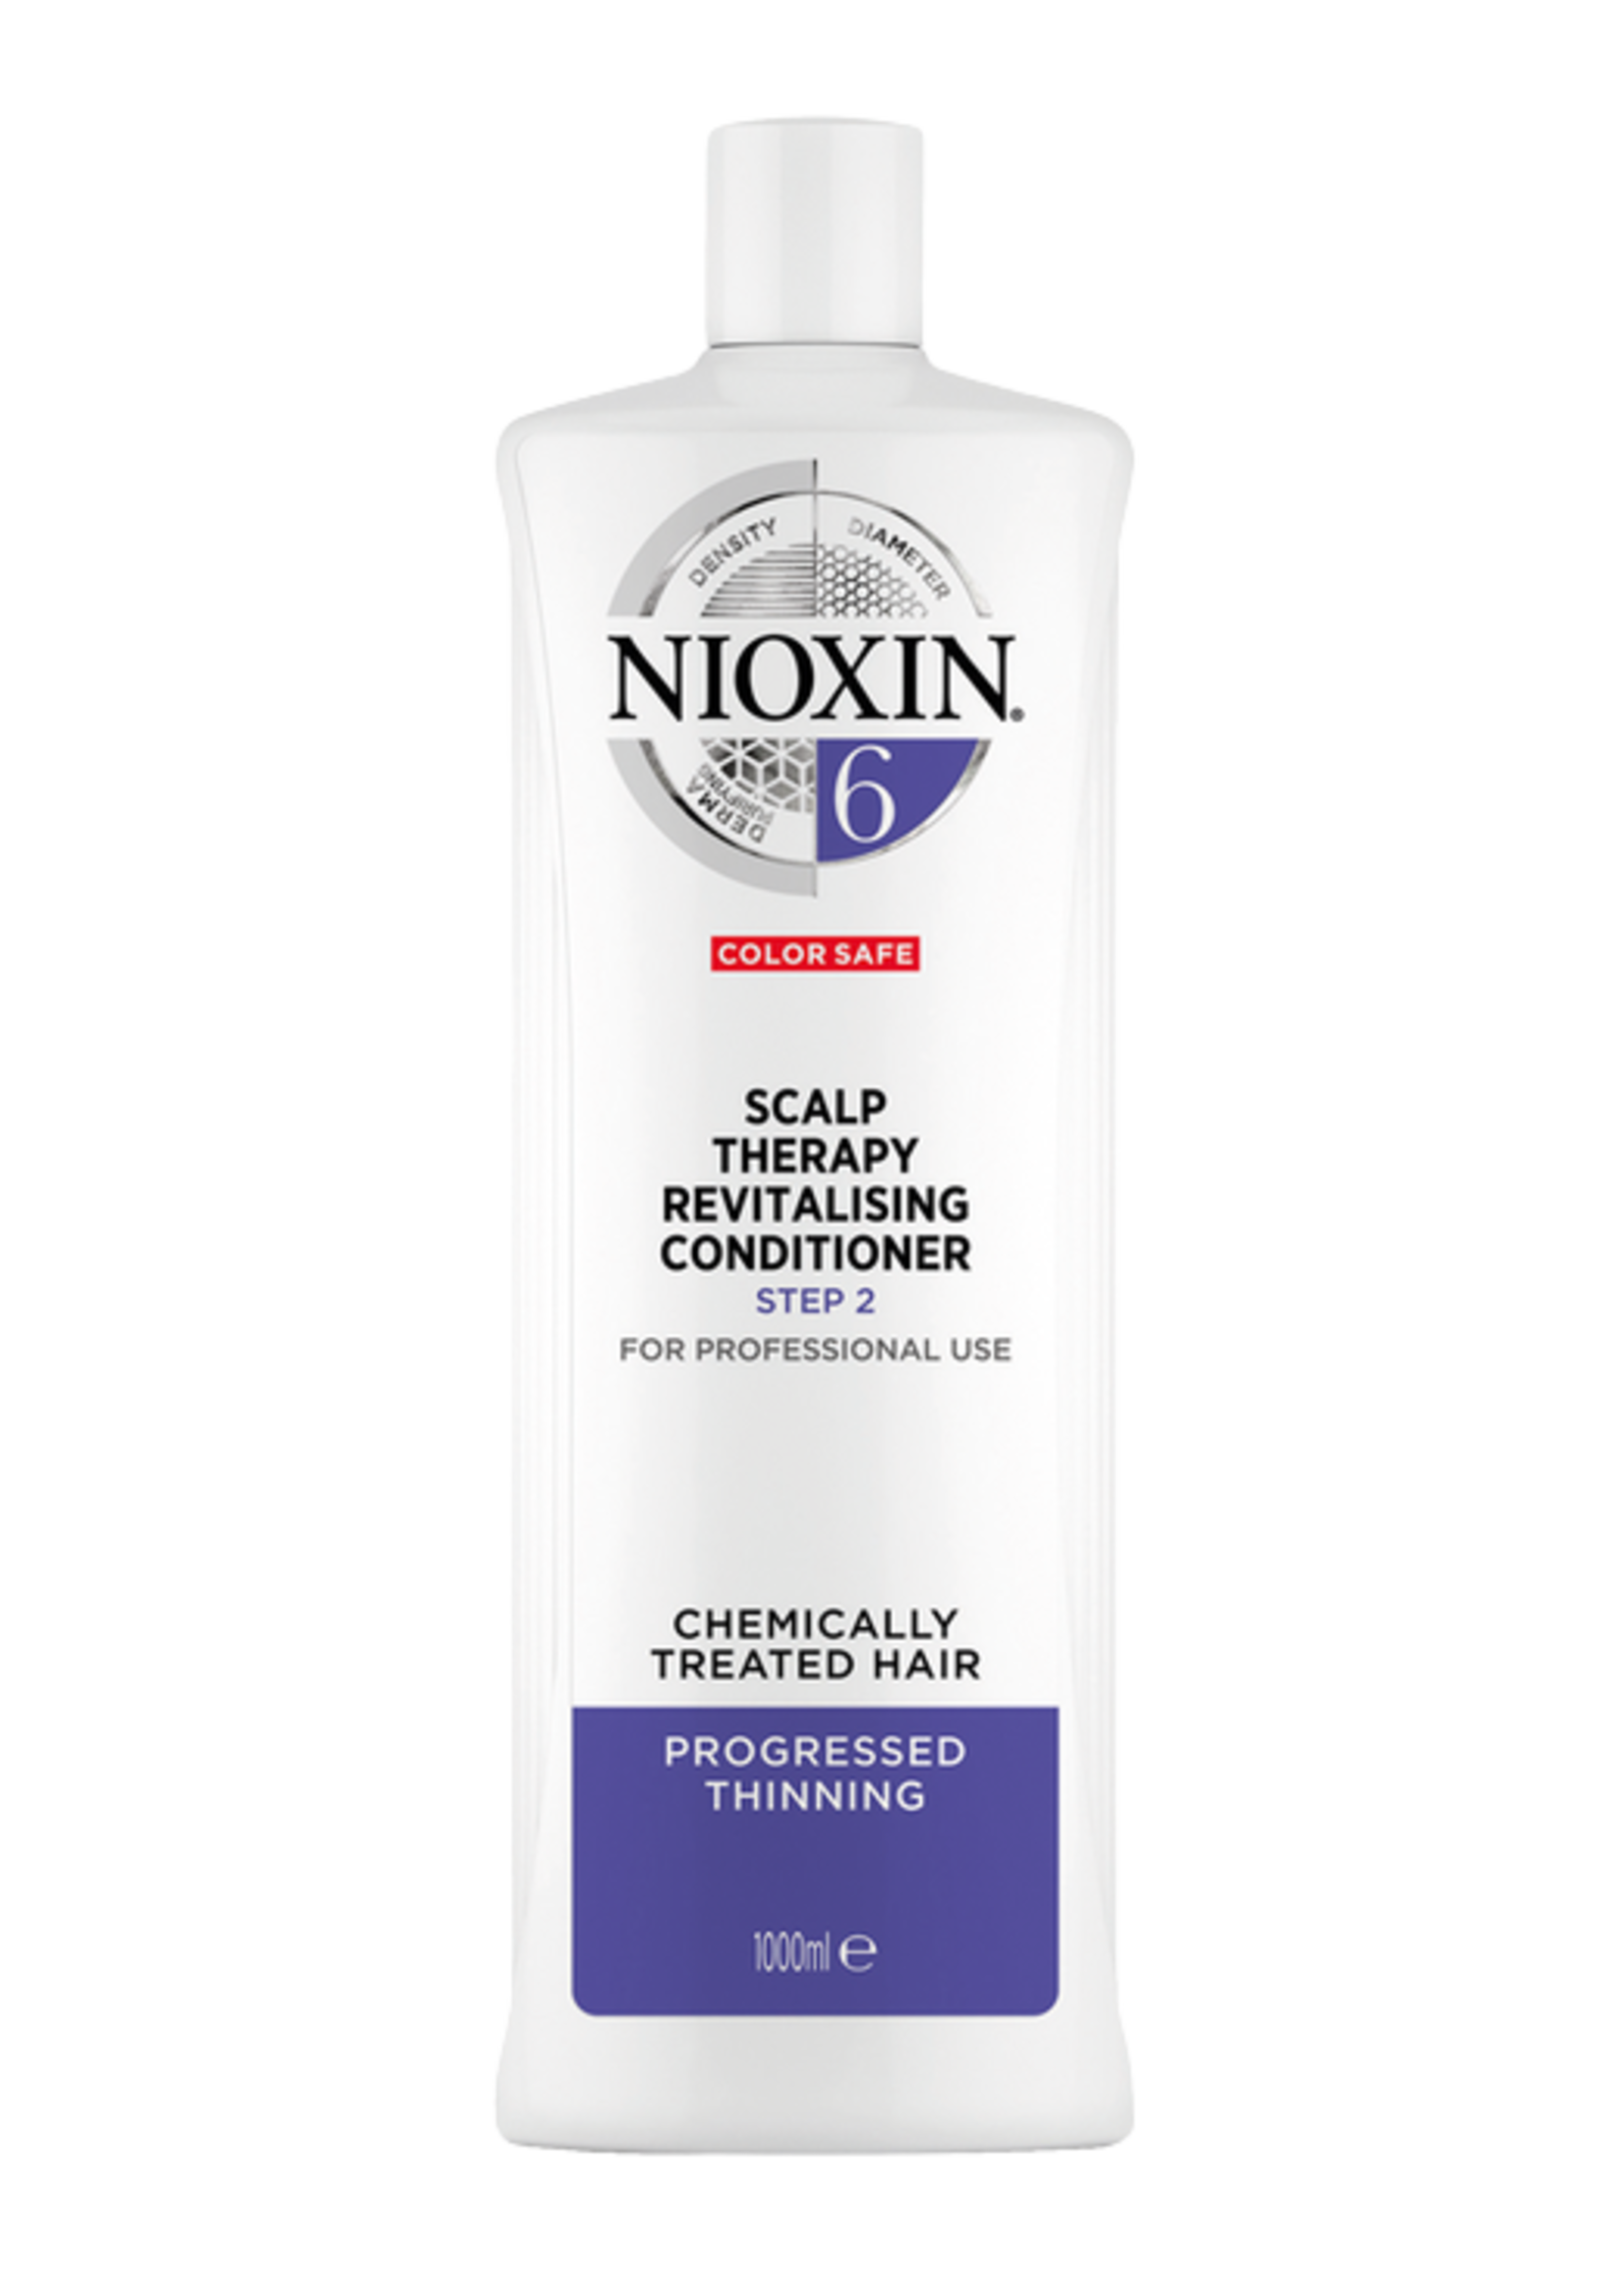 Nioxin Nioxin System 6 Scalp Therapy Revitalizing Conditioner 1L